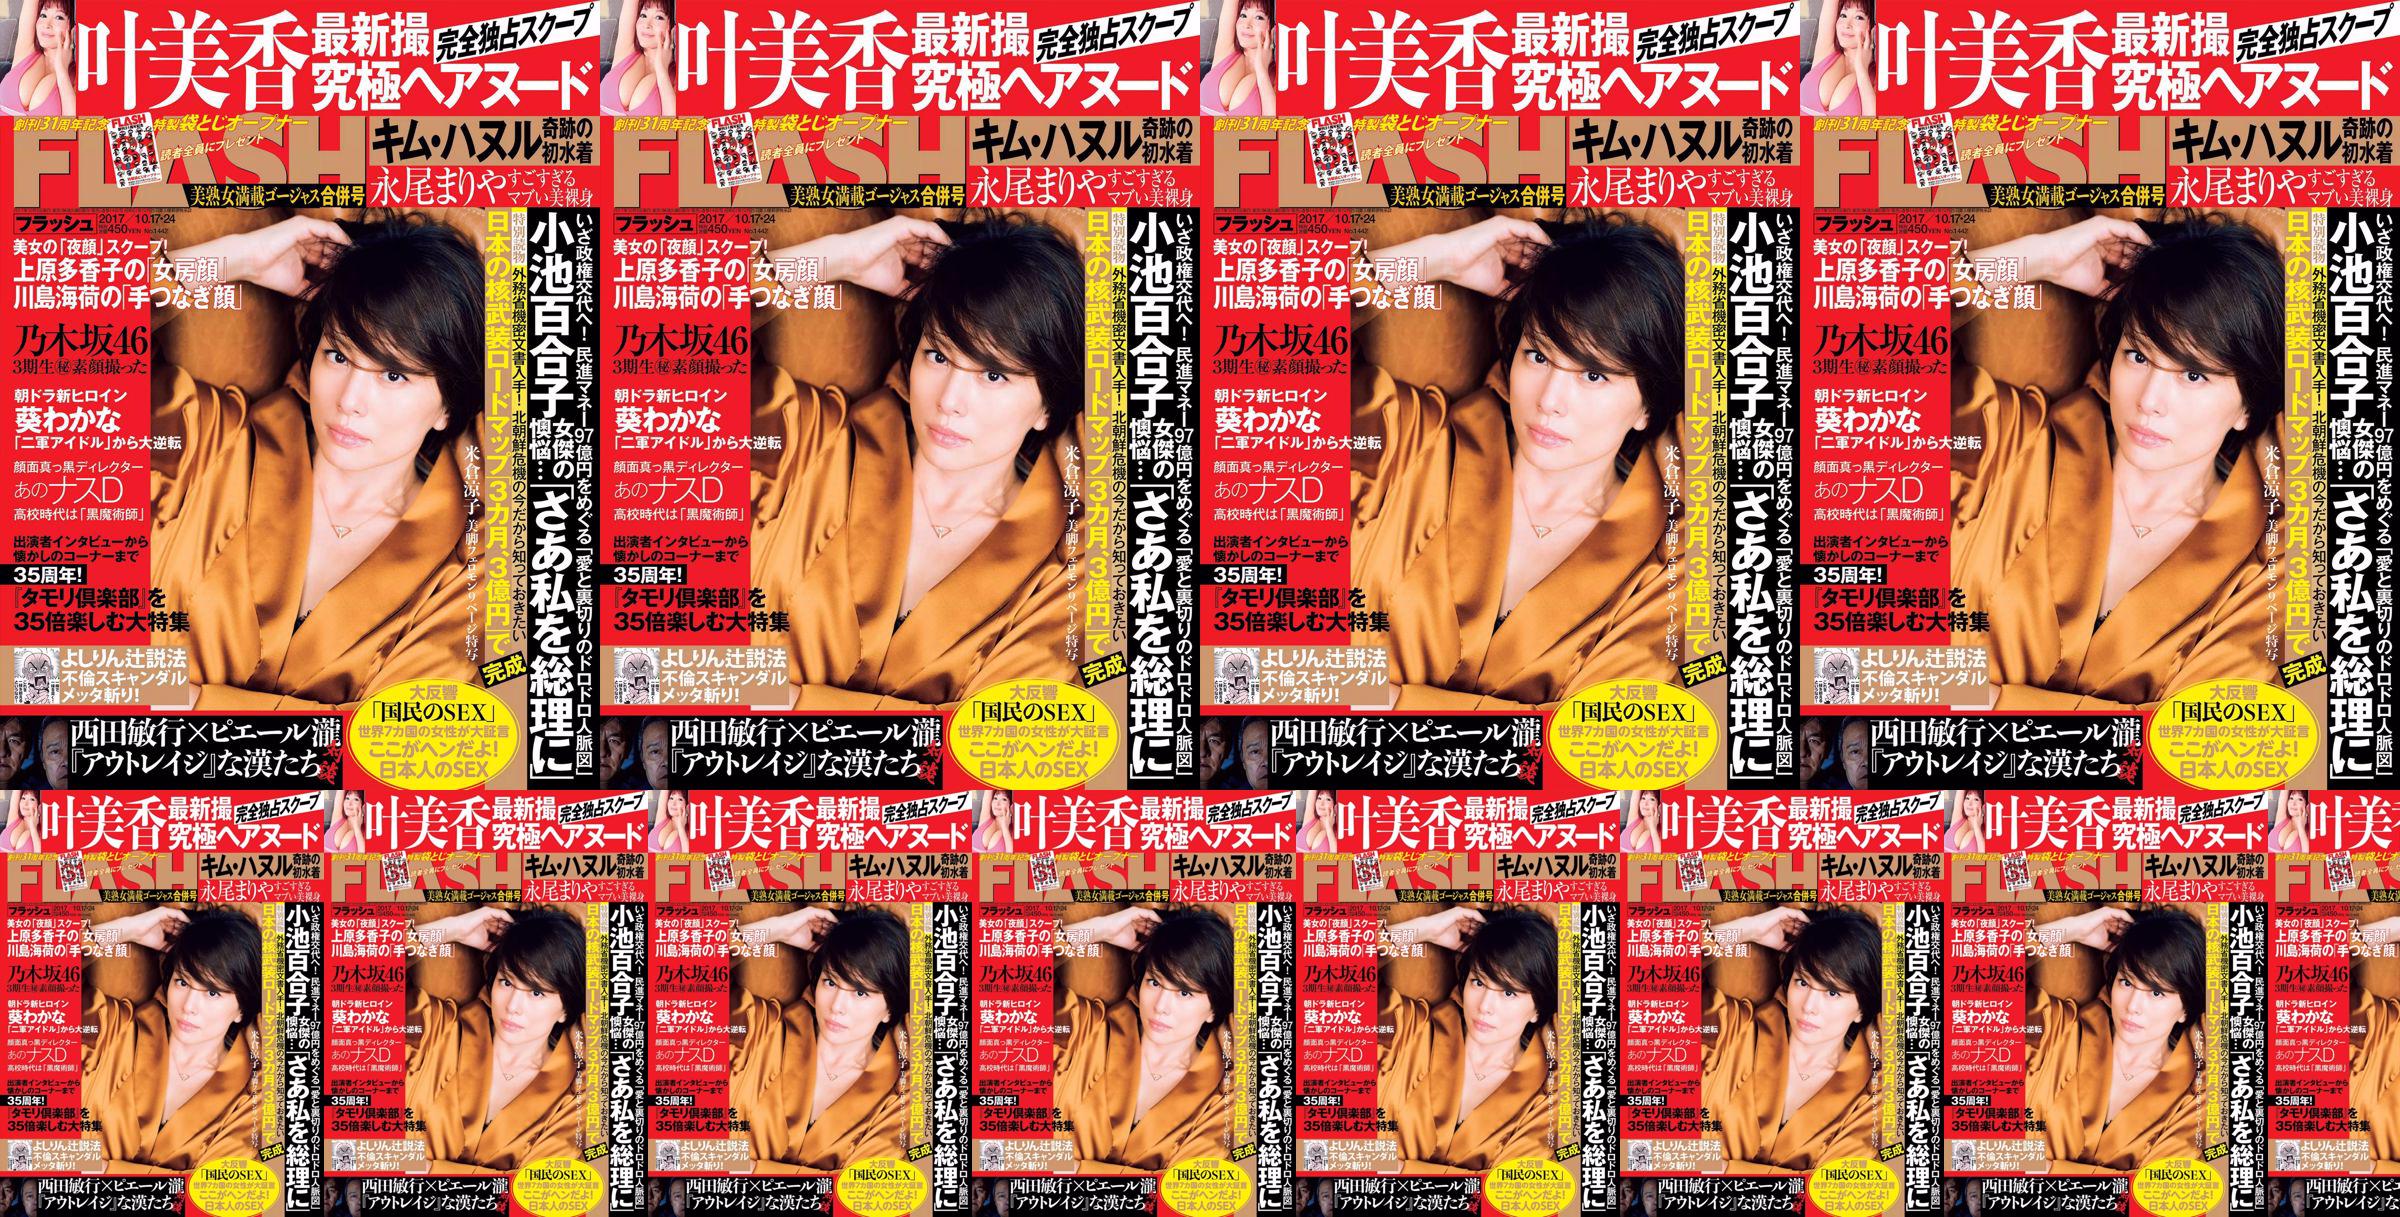 [FLASH] Yonekura Ryoko Ye Meixiang Tachibana Flower Rin Nagao Rika 2017.10.17-24 นิตยสารภาพถ่าย No.3e1f48 หน้า 6